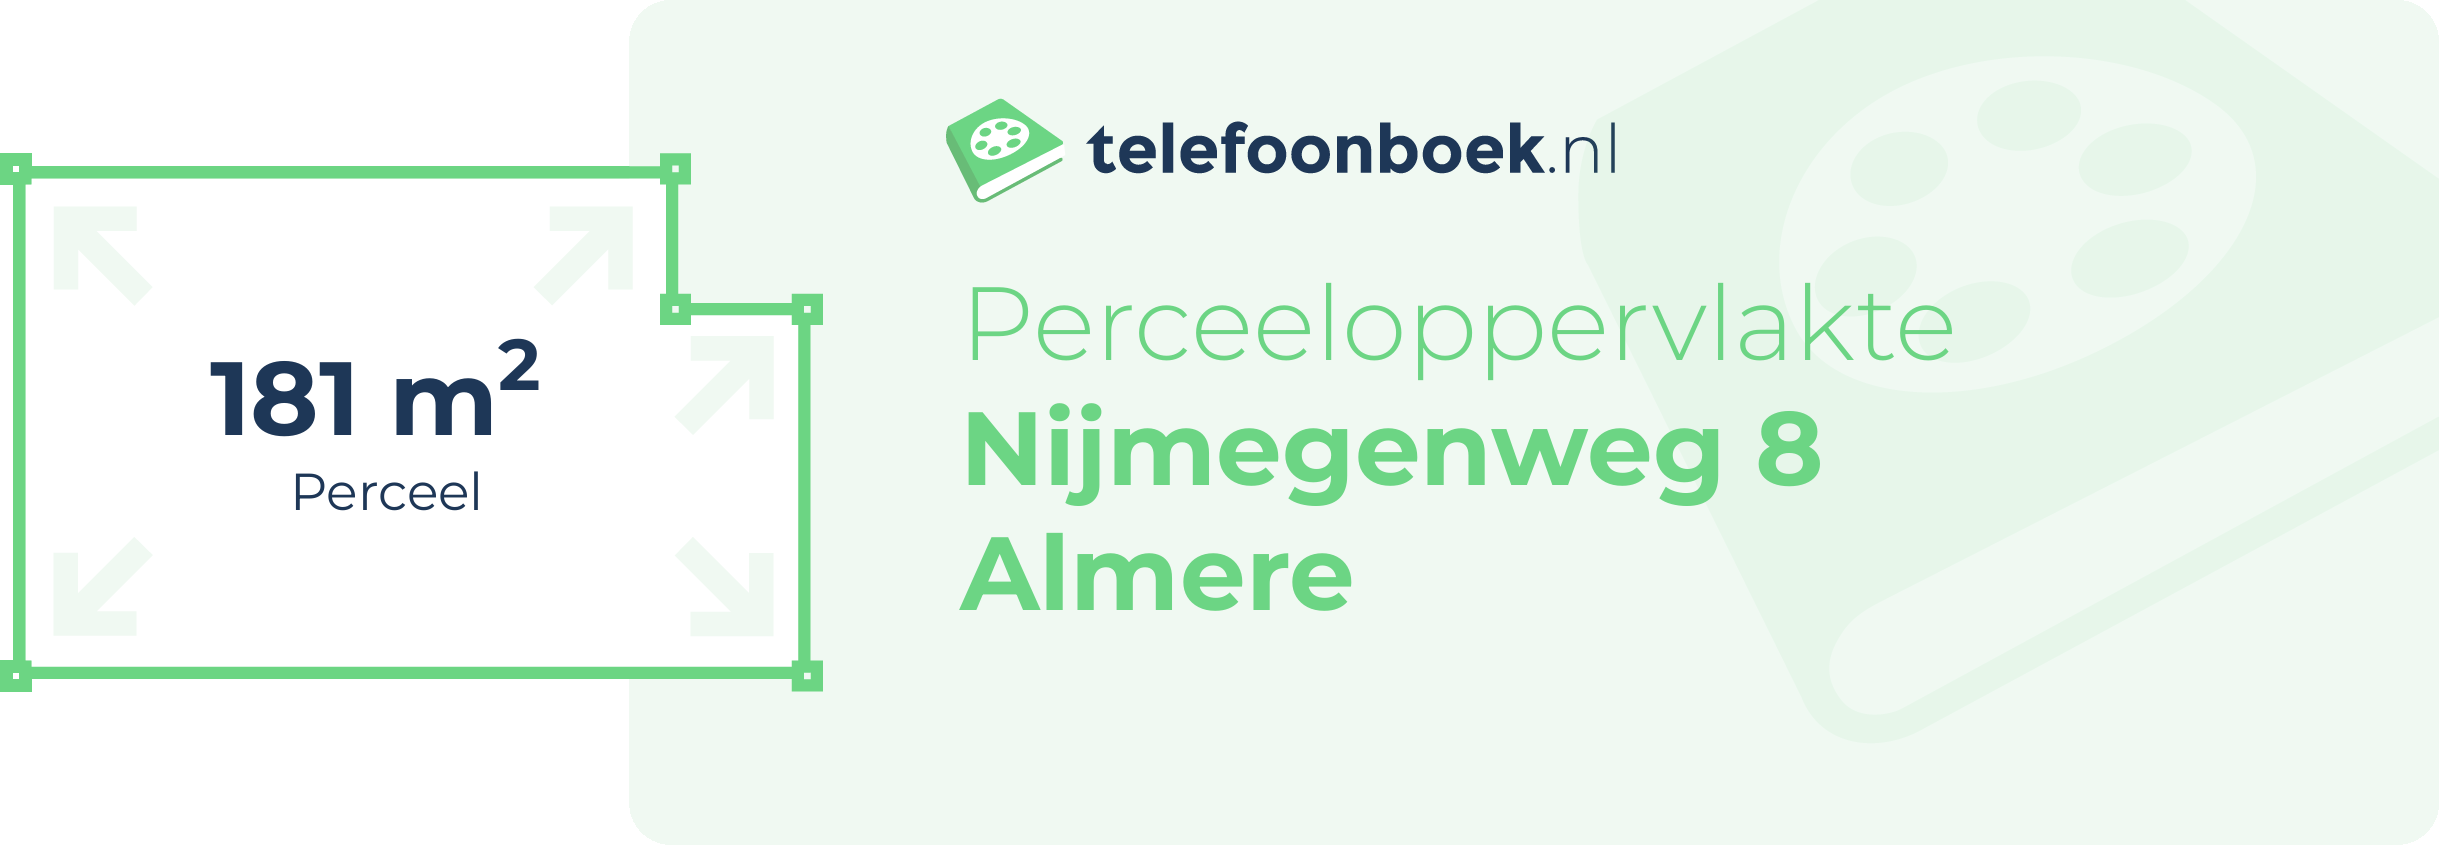 Perceeloppervlakte Nijmegenweg 8 Almere